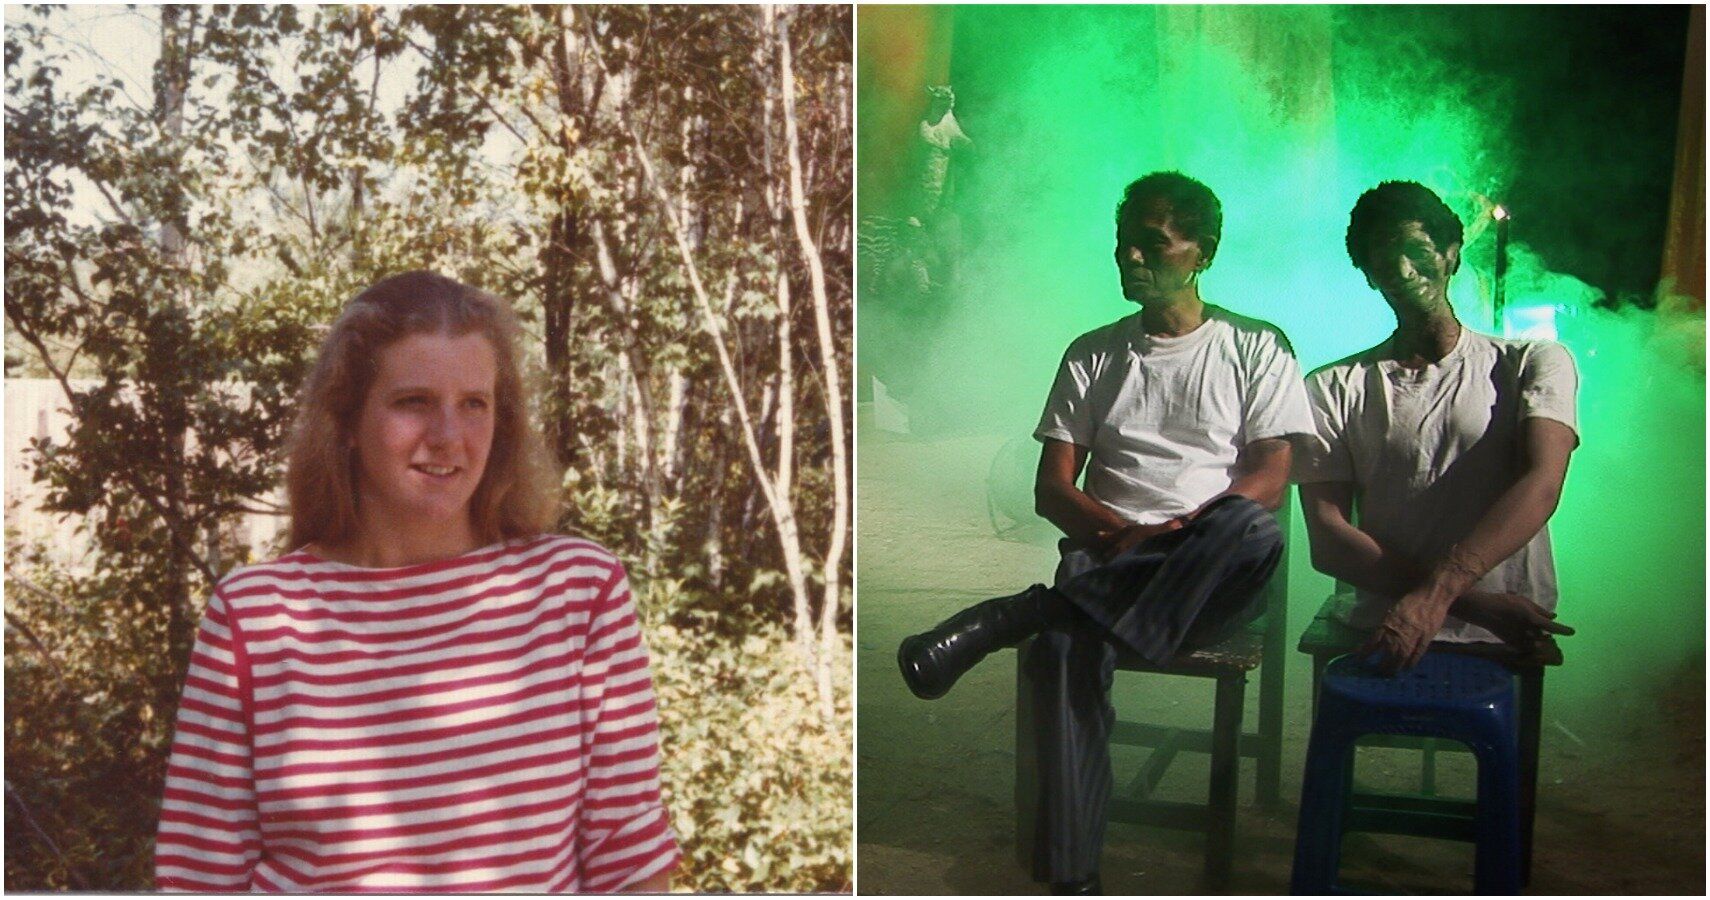 split image of woman and man with green smoke